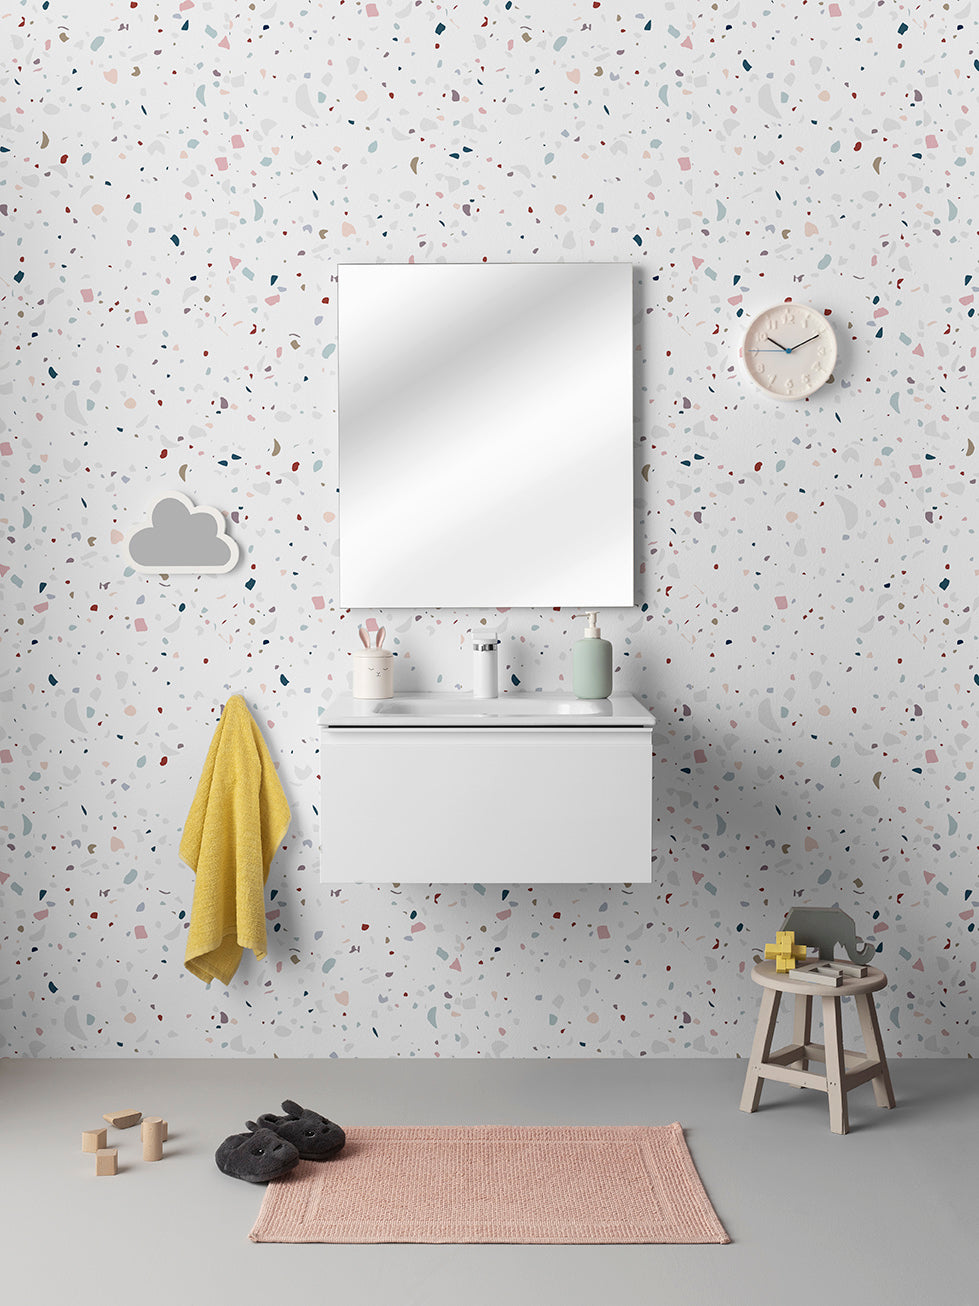 Murano - Bathroom vanity mirror